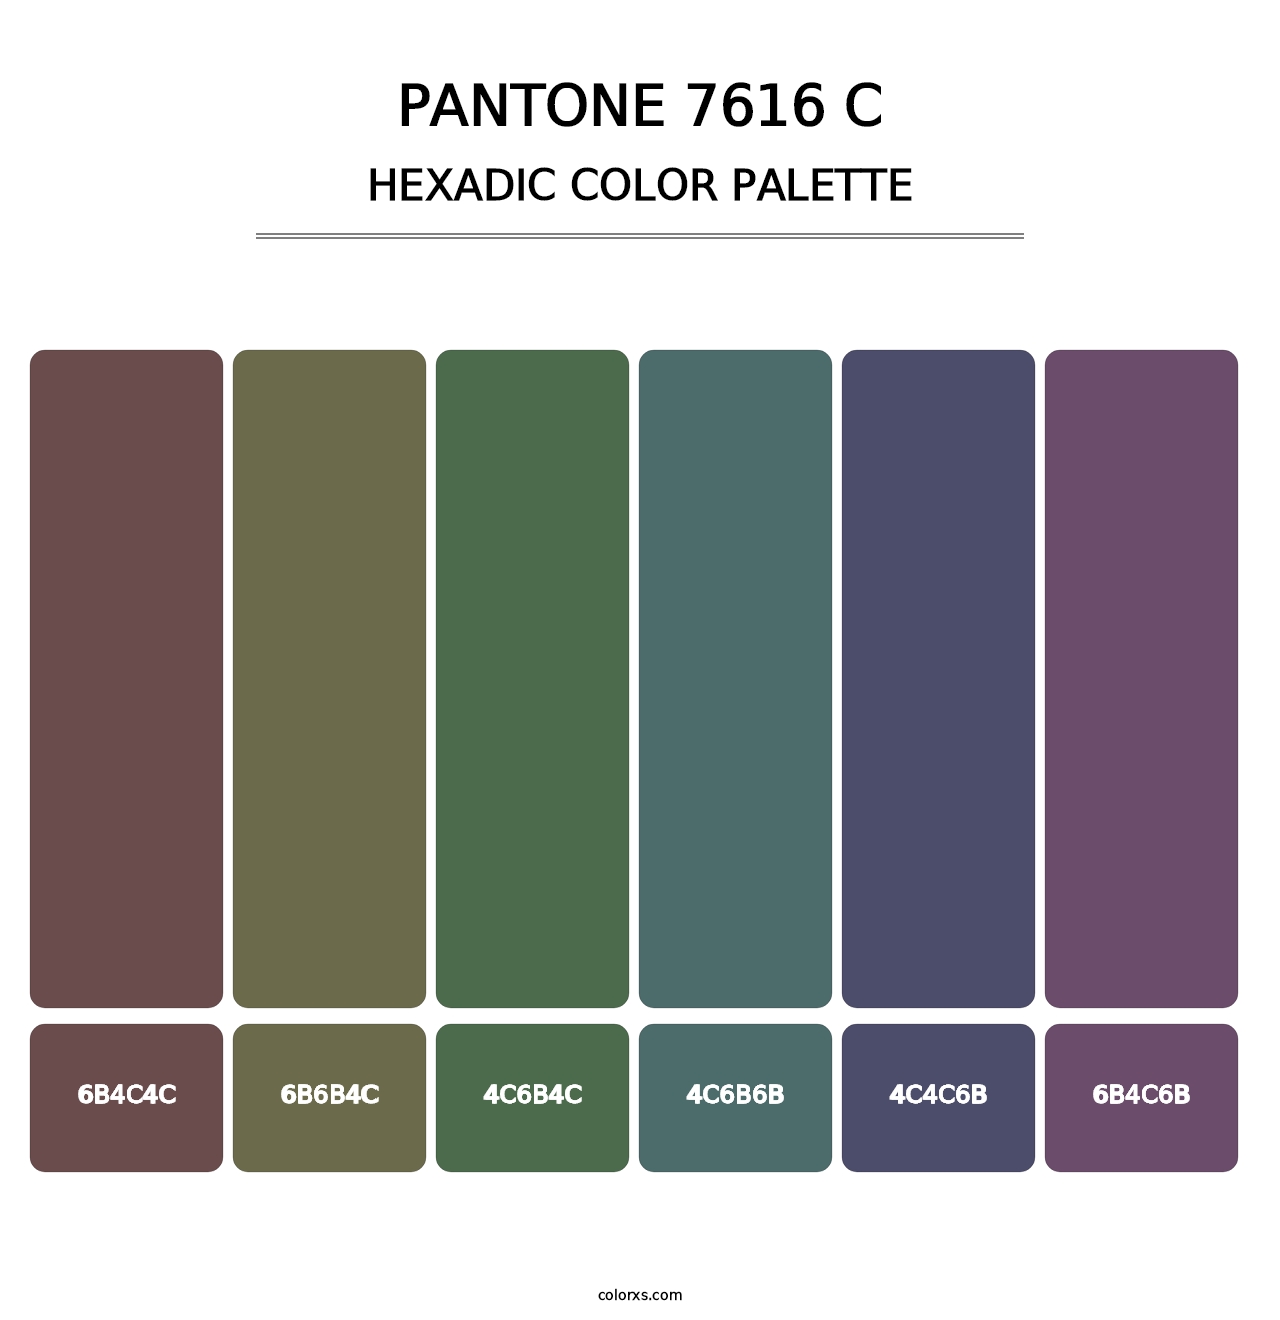 PANTONE 7616 C - Hexadic Color Palette